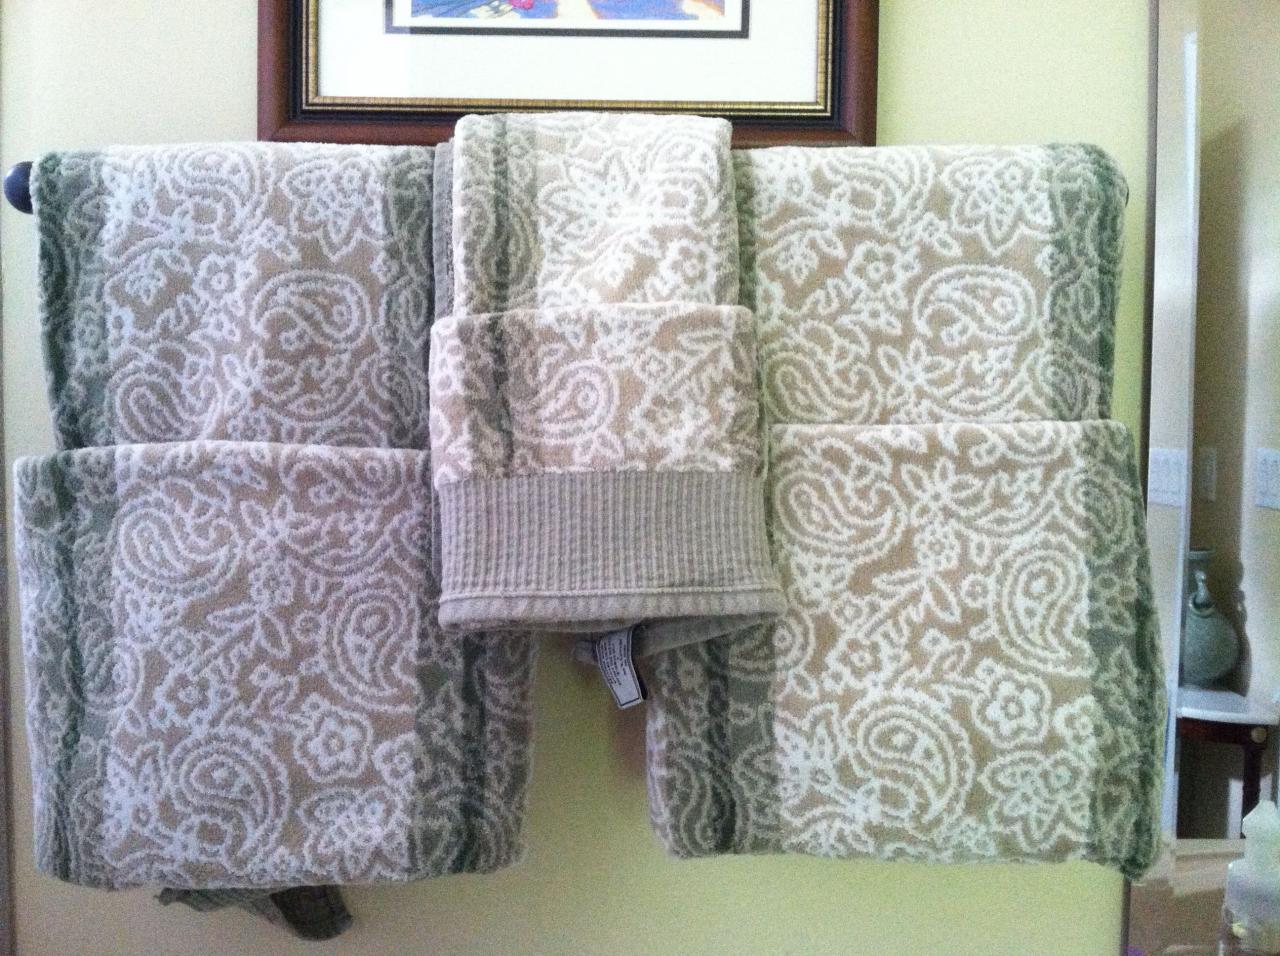 Fold towels in guest bathroom or any bathroom in general. Bathroom